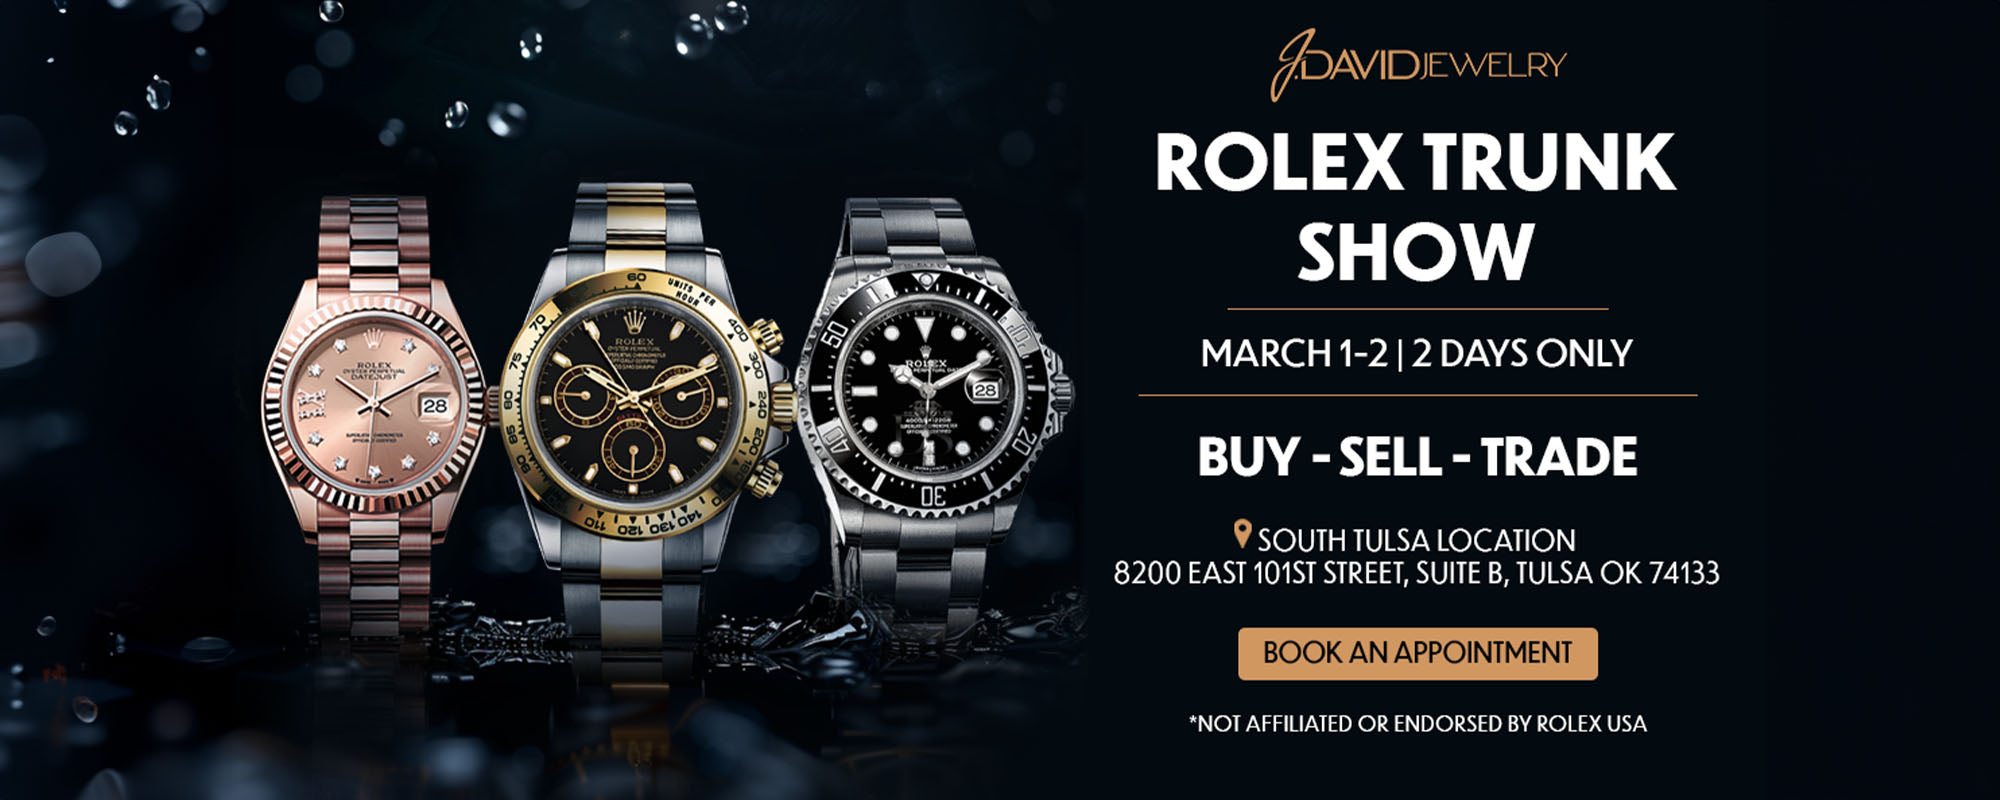 Rolex Trunk Show Happening Soon!